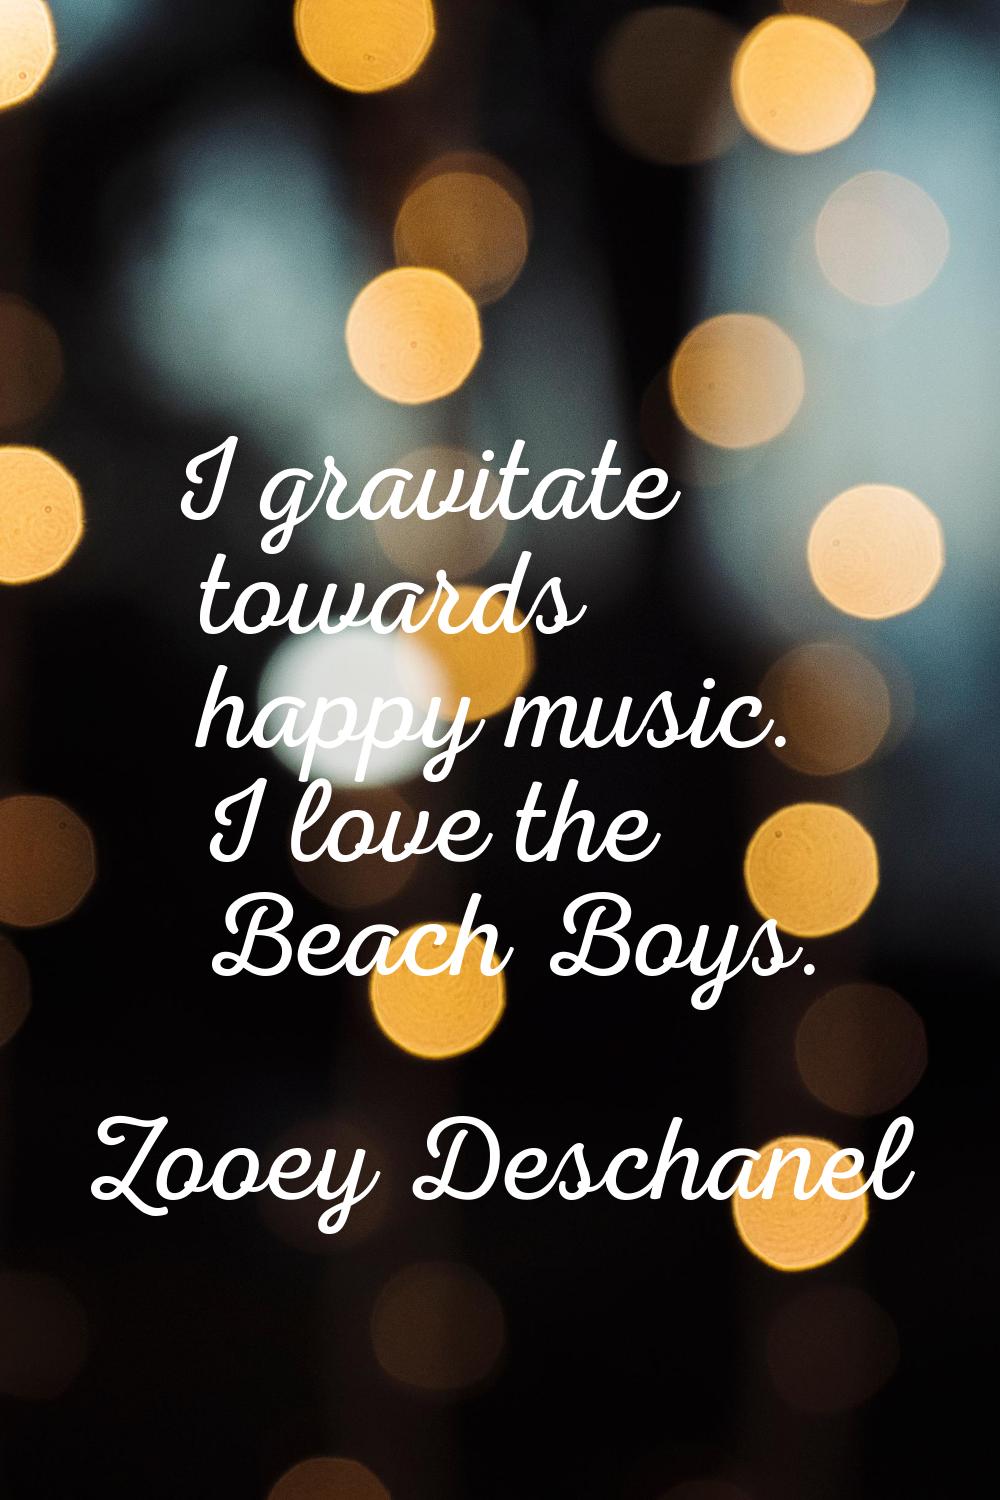 I gravitate towards happy music. I love the Beach Boys.